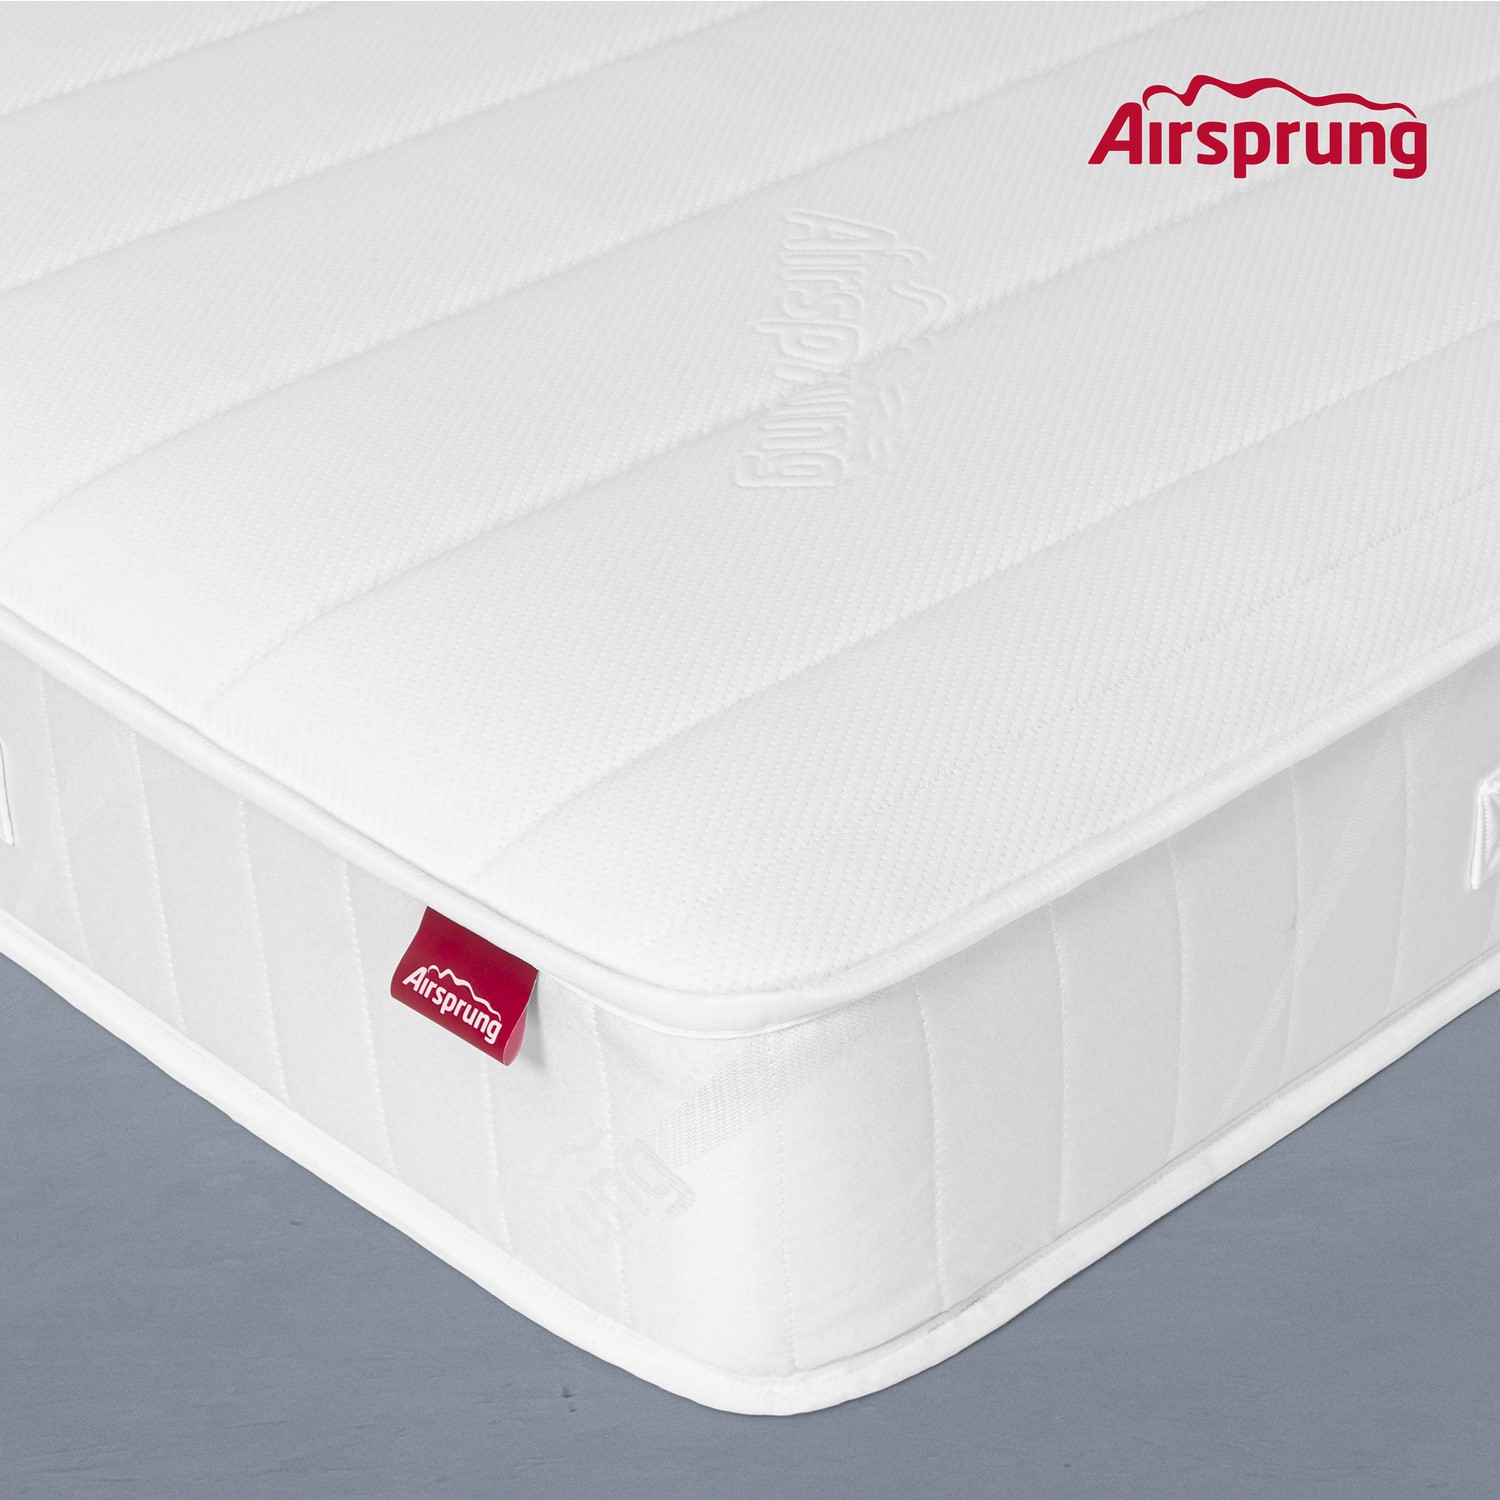 Airsprung comfort rolled coil spring mattress - super king